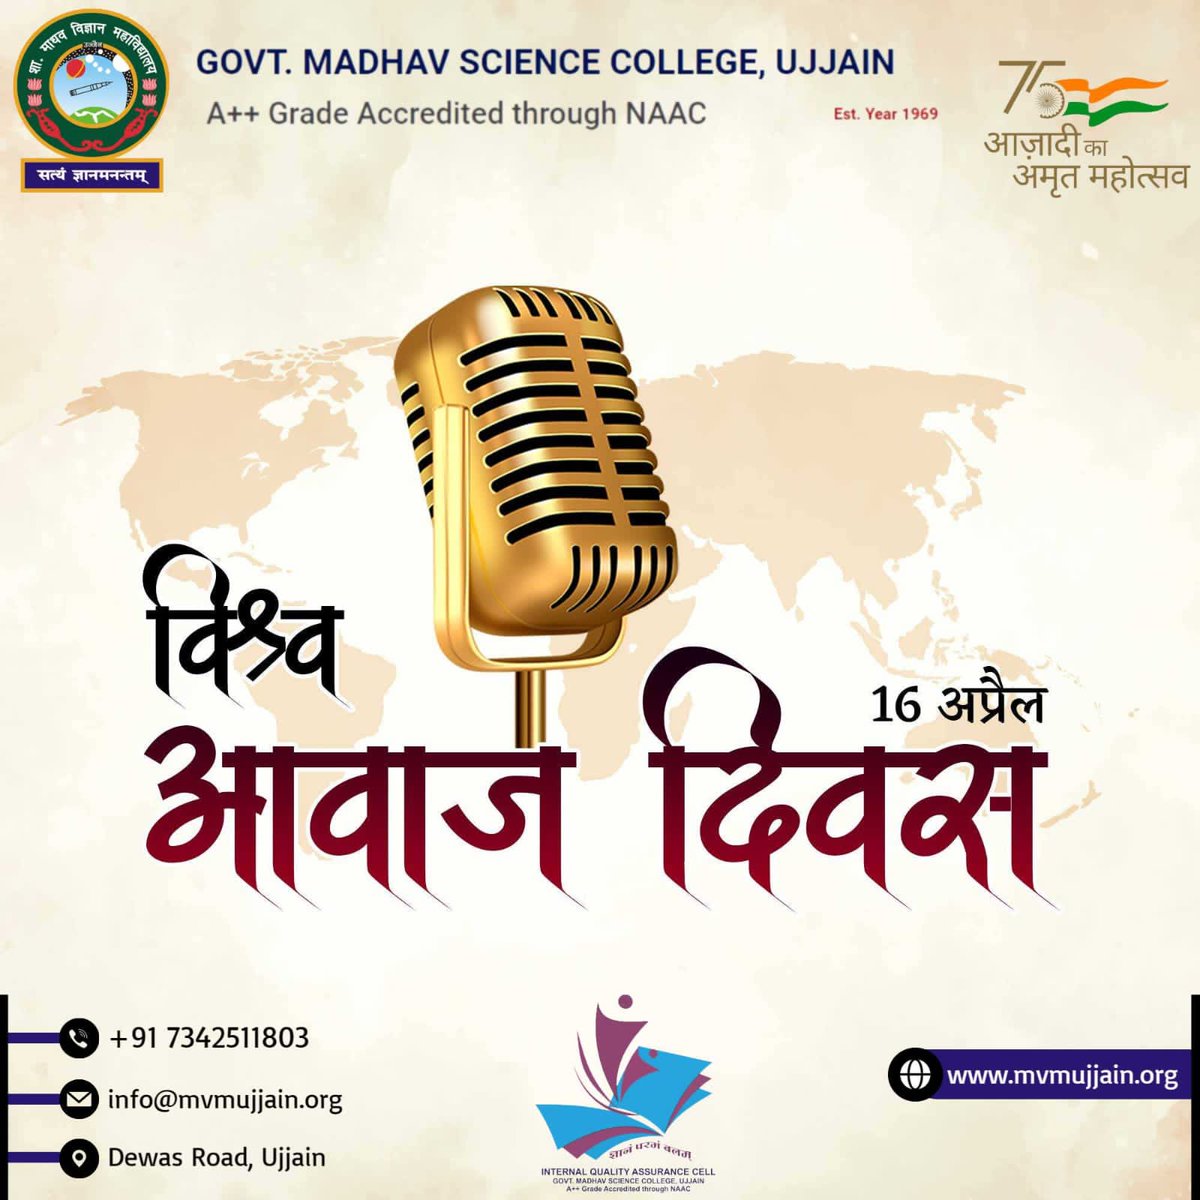 Greetings from Govt. Madhav Science College Ujjain
                    #VocalHealth #VoiceCare #ProtectYourVoice #ShareYourVoice #VoiceIsPower #FindYourVoice #HealthyVoice #SingOut #VoiceTalent #VoiceOfChange